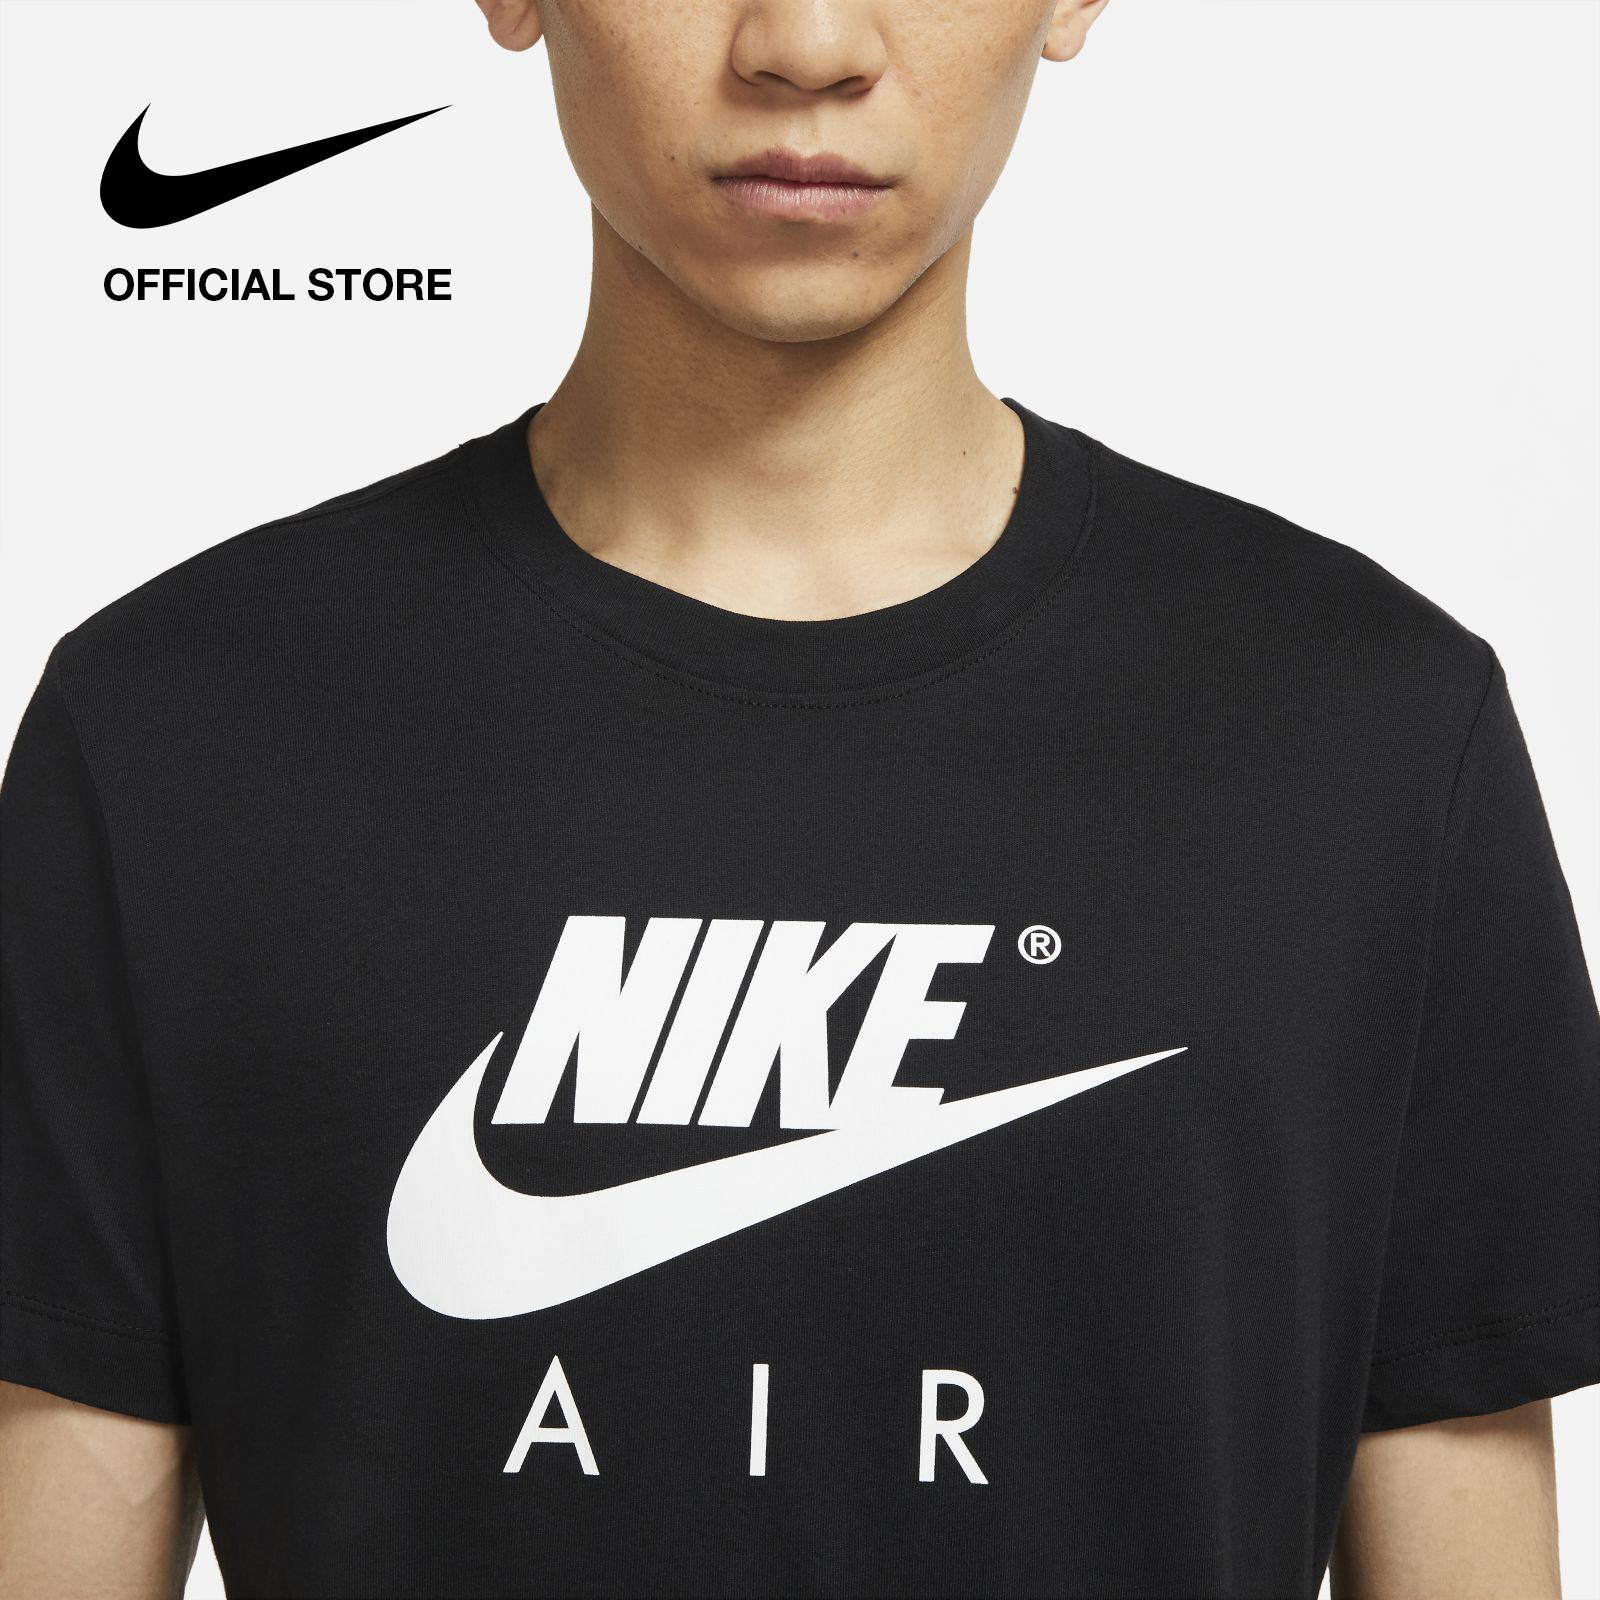 Nike Men's Sportswear T-Shirt - Black ไนกี้ เสื้อยืดผู้ชาย - สีดำ